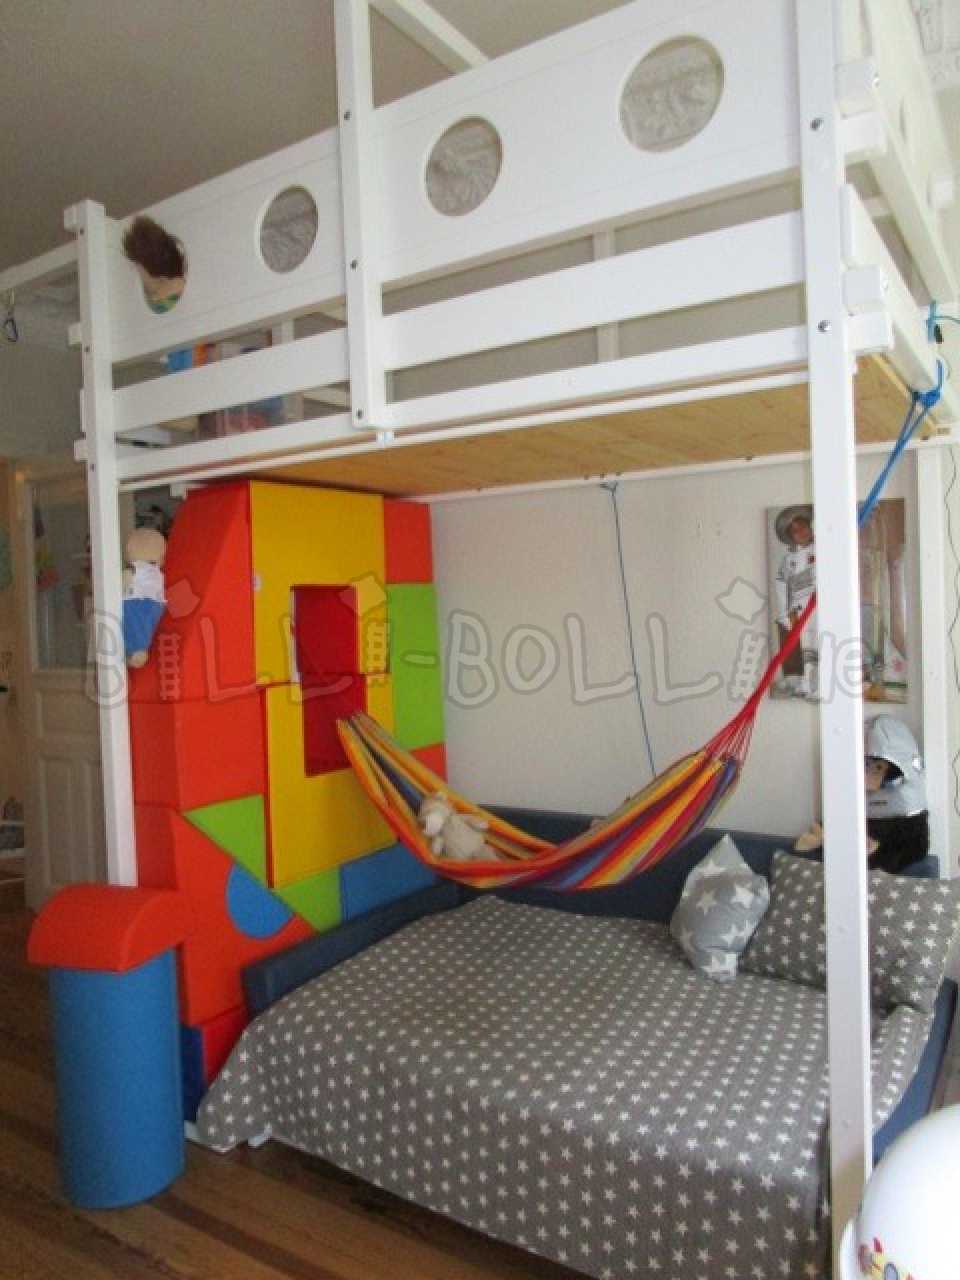 Billi-Bolli-Abenteuerbett, 120 x 200 cm, Kiefer weiß lackiert (Kategorie: Kinderbett gebraucht)